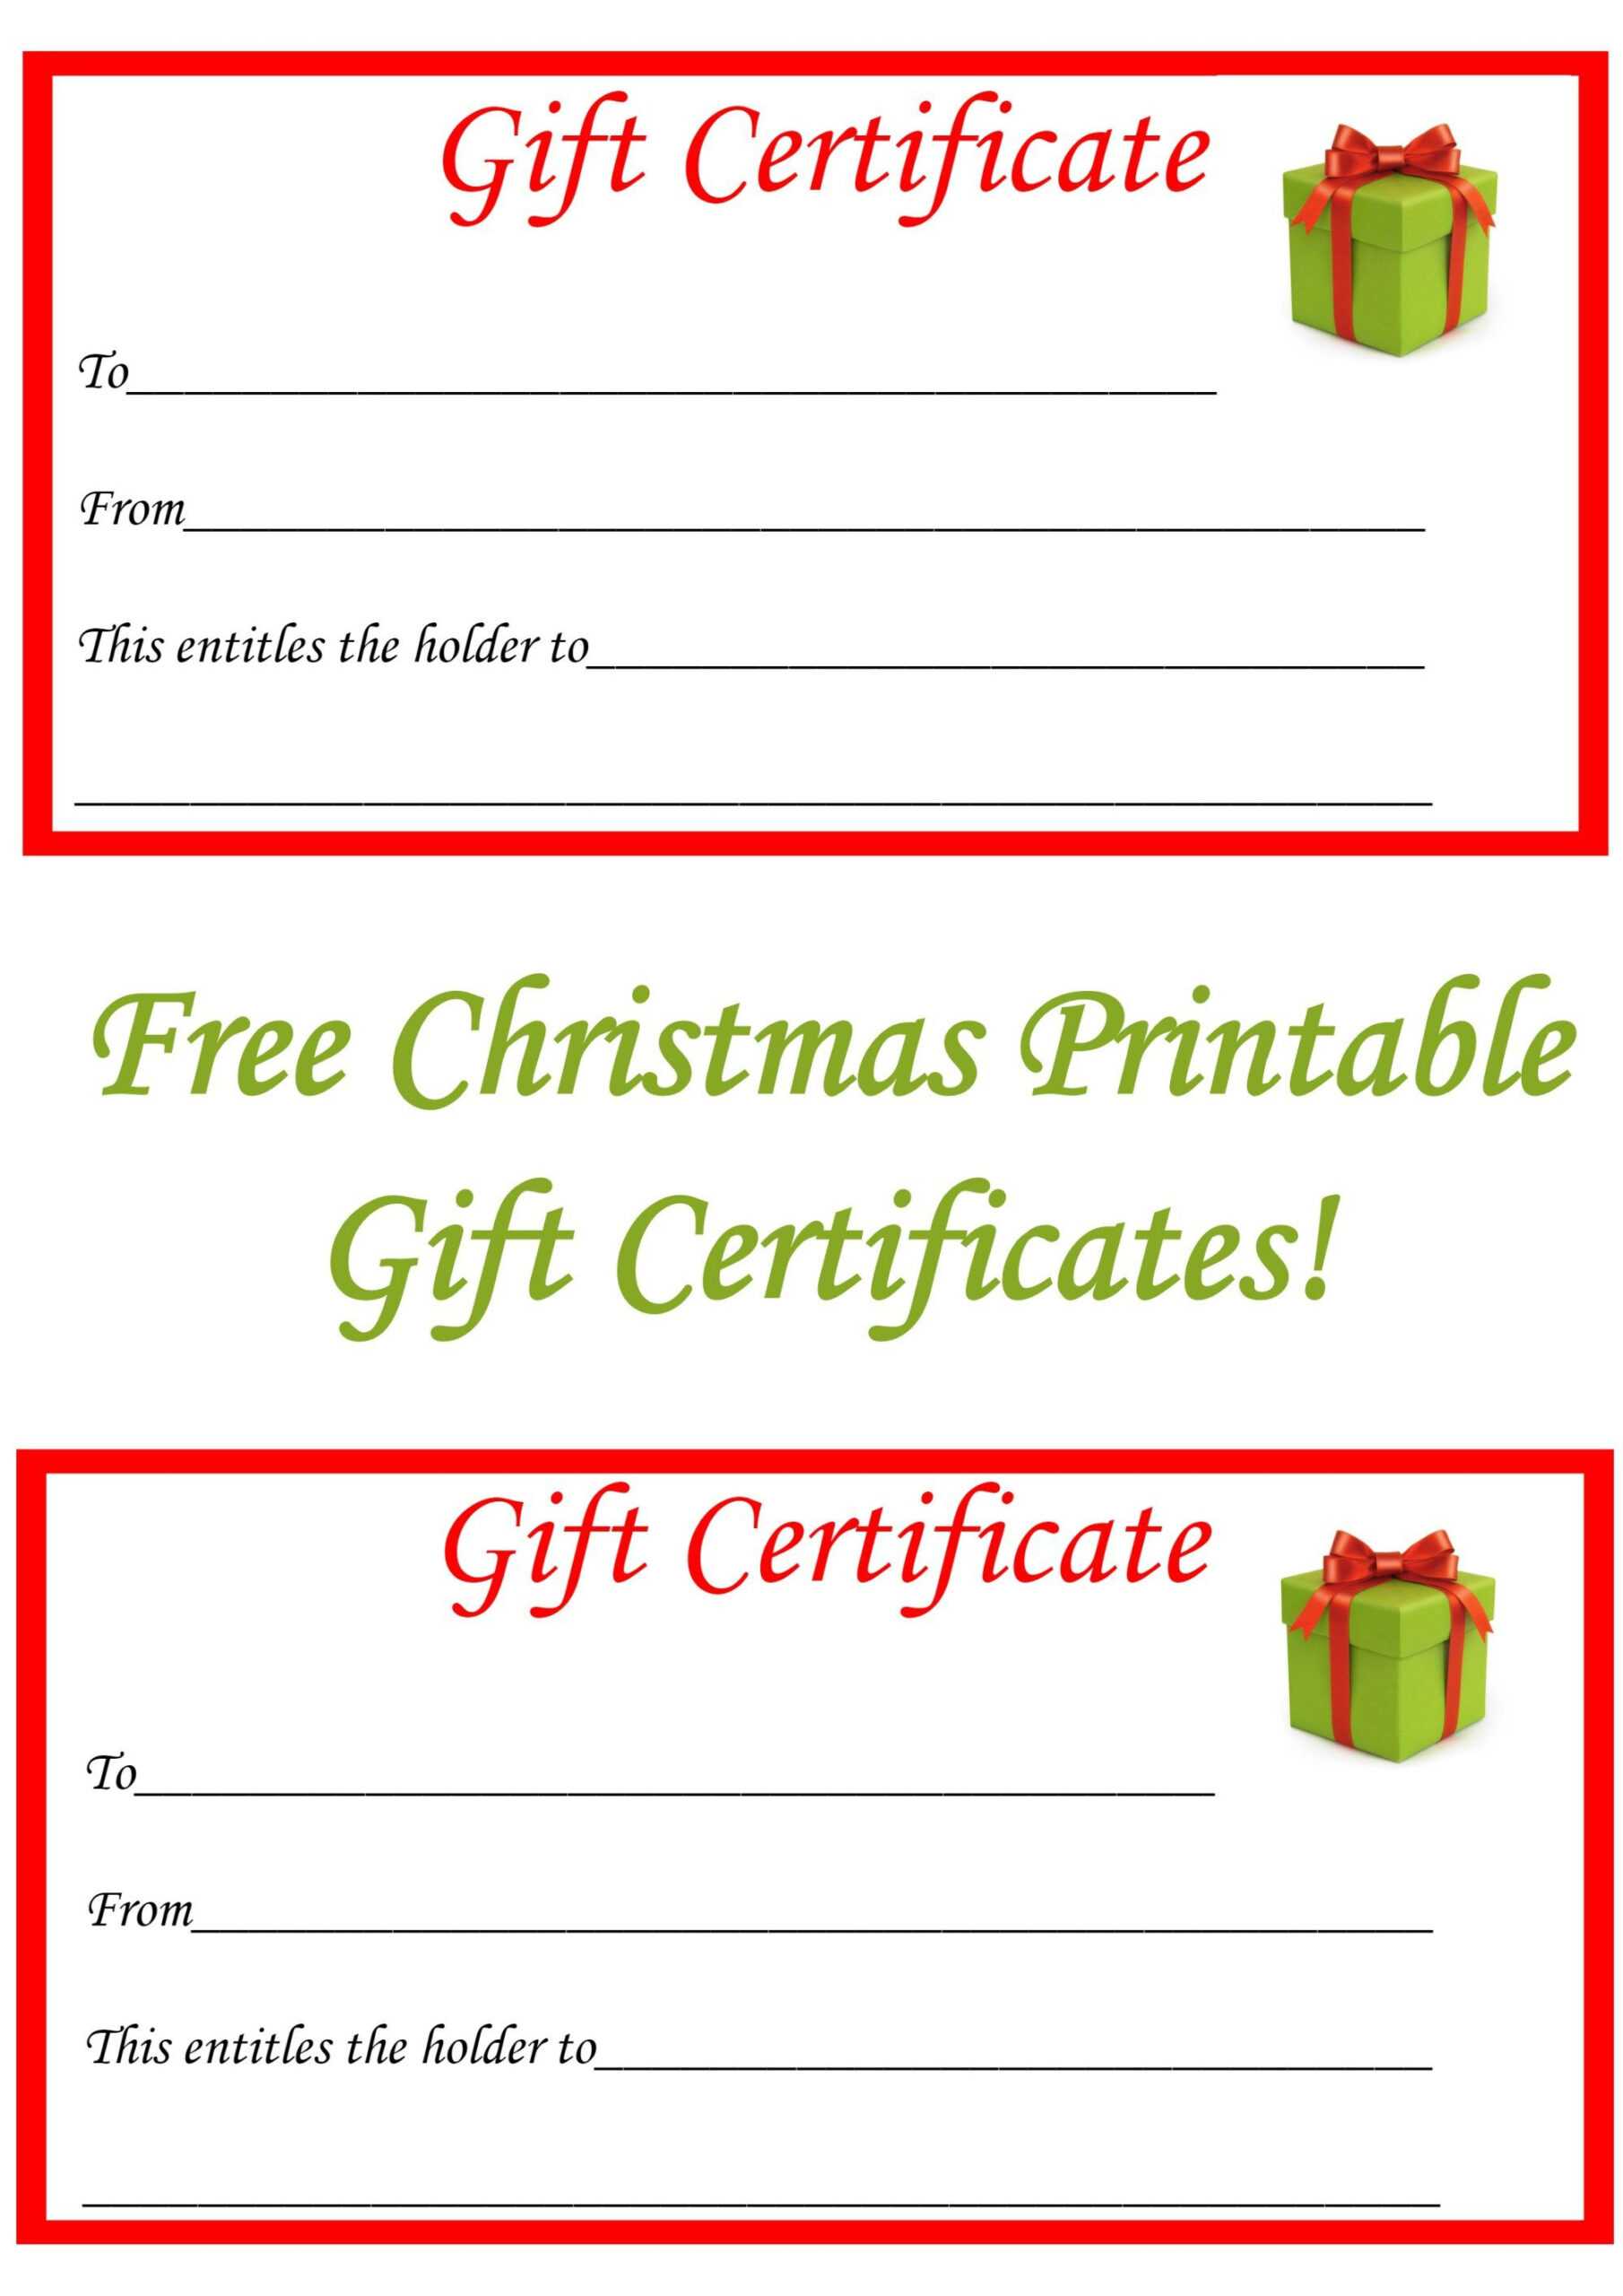 Free Printable Christmas Gift Certificate Template Intended For Printable Gift Certificates Templates Free